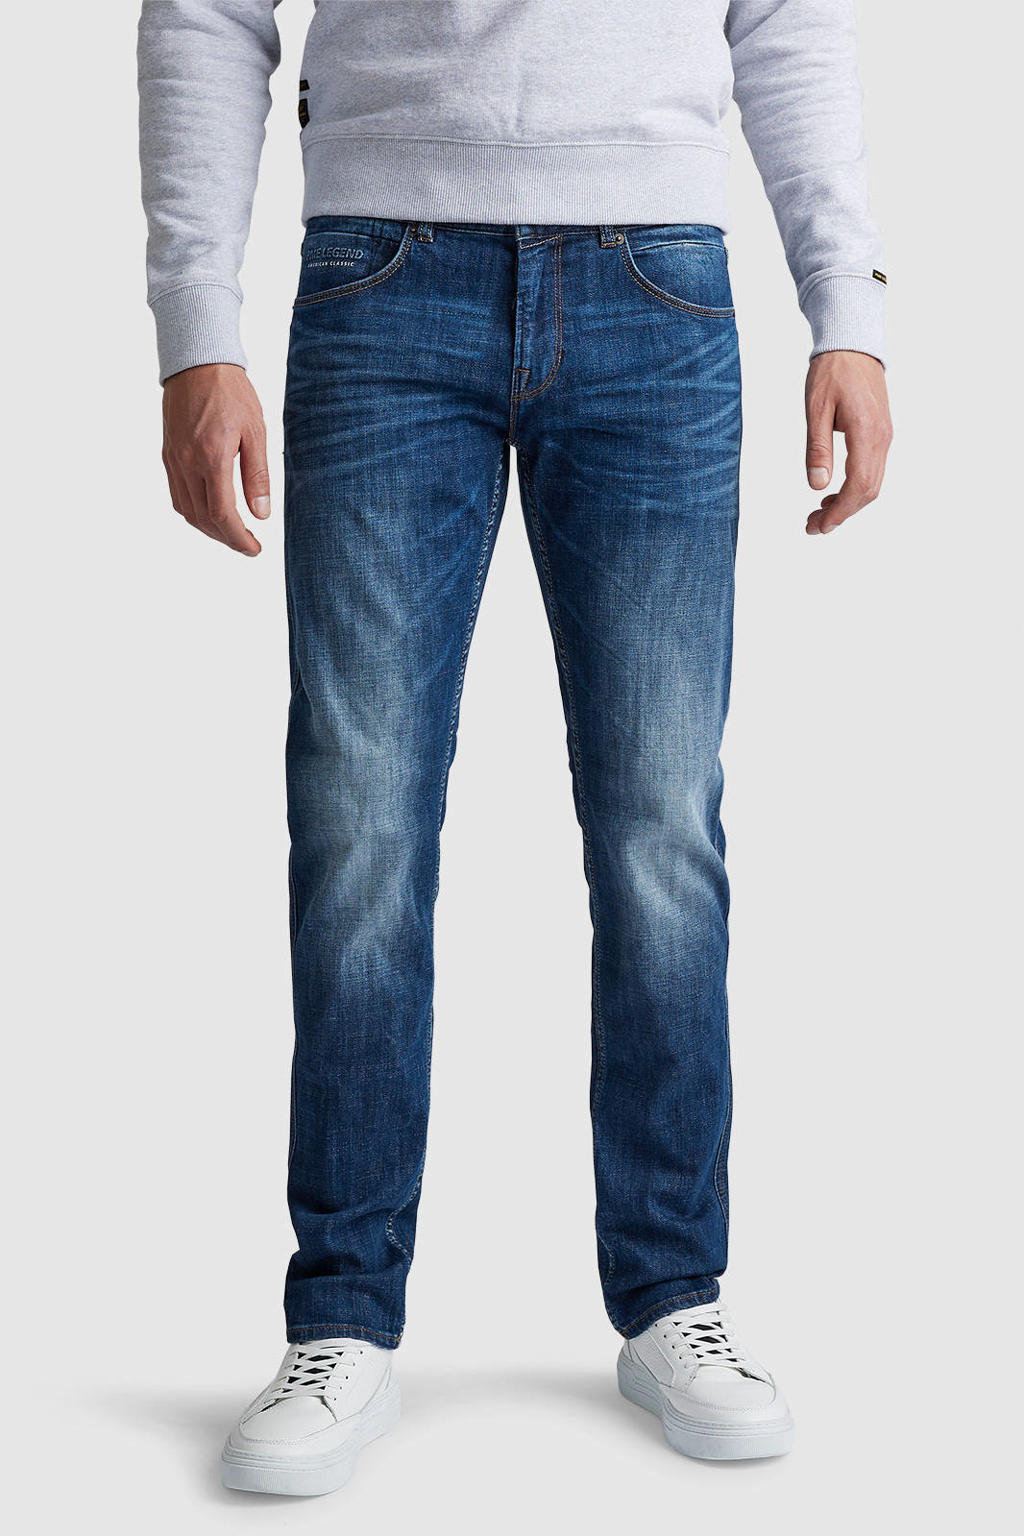 PME Legend regular straight fit jeans Nightflight donkerblauw | wehkamp